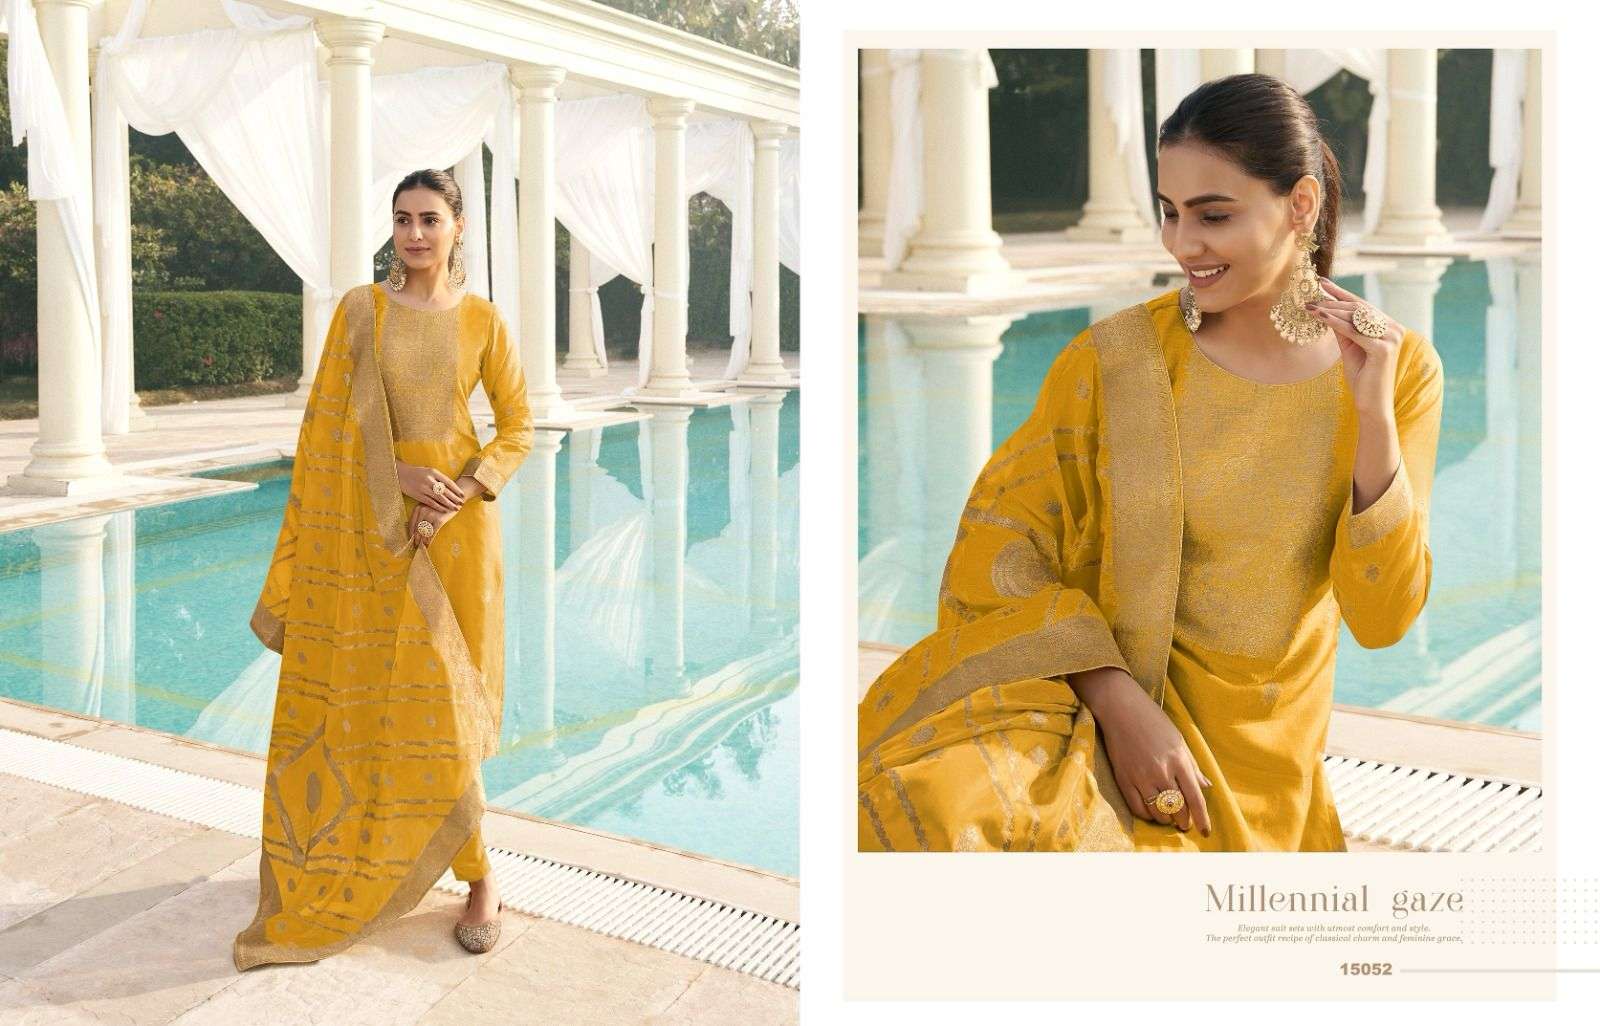 Olive Vol 2 Buy Zisa Trendz Wholesale Online Lowest Price Silk Salwar Suit Set